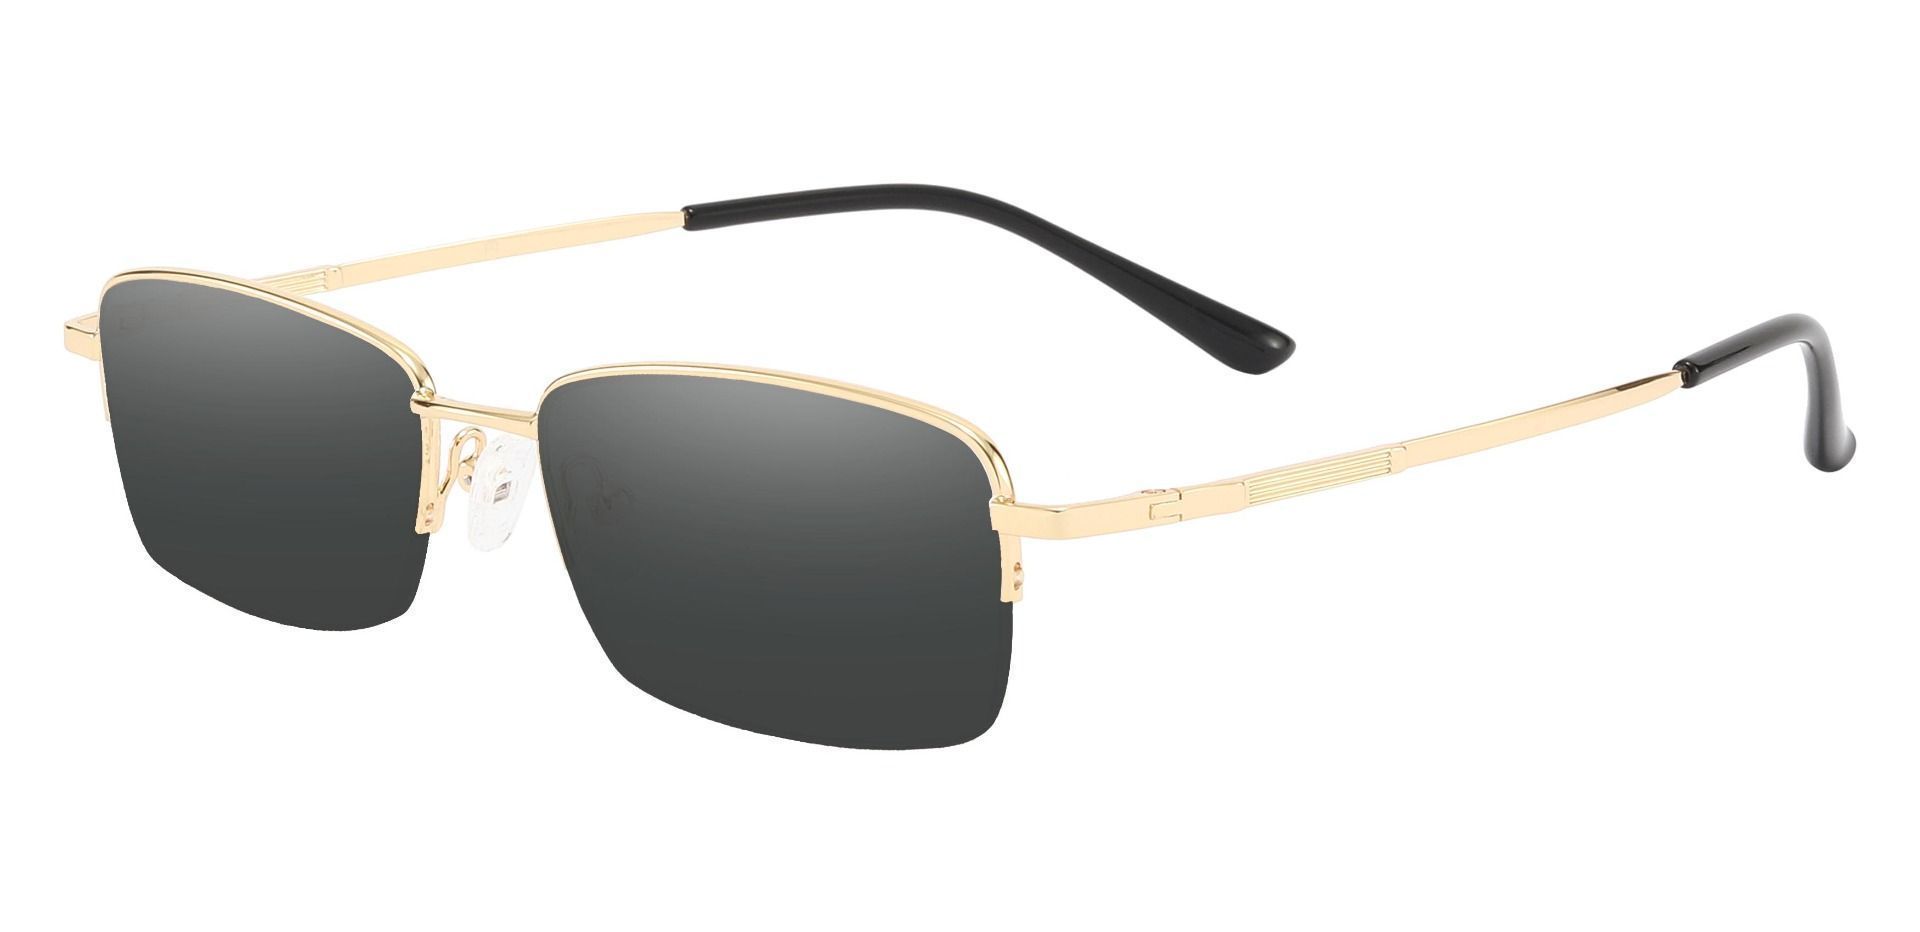 Milford Rectangle Prescription Sunglasses - Gold Frame With Gray Lenses